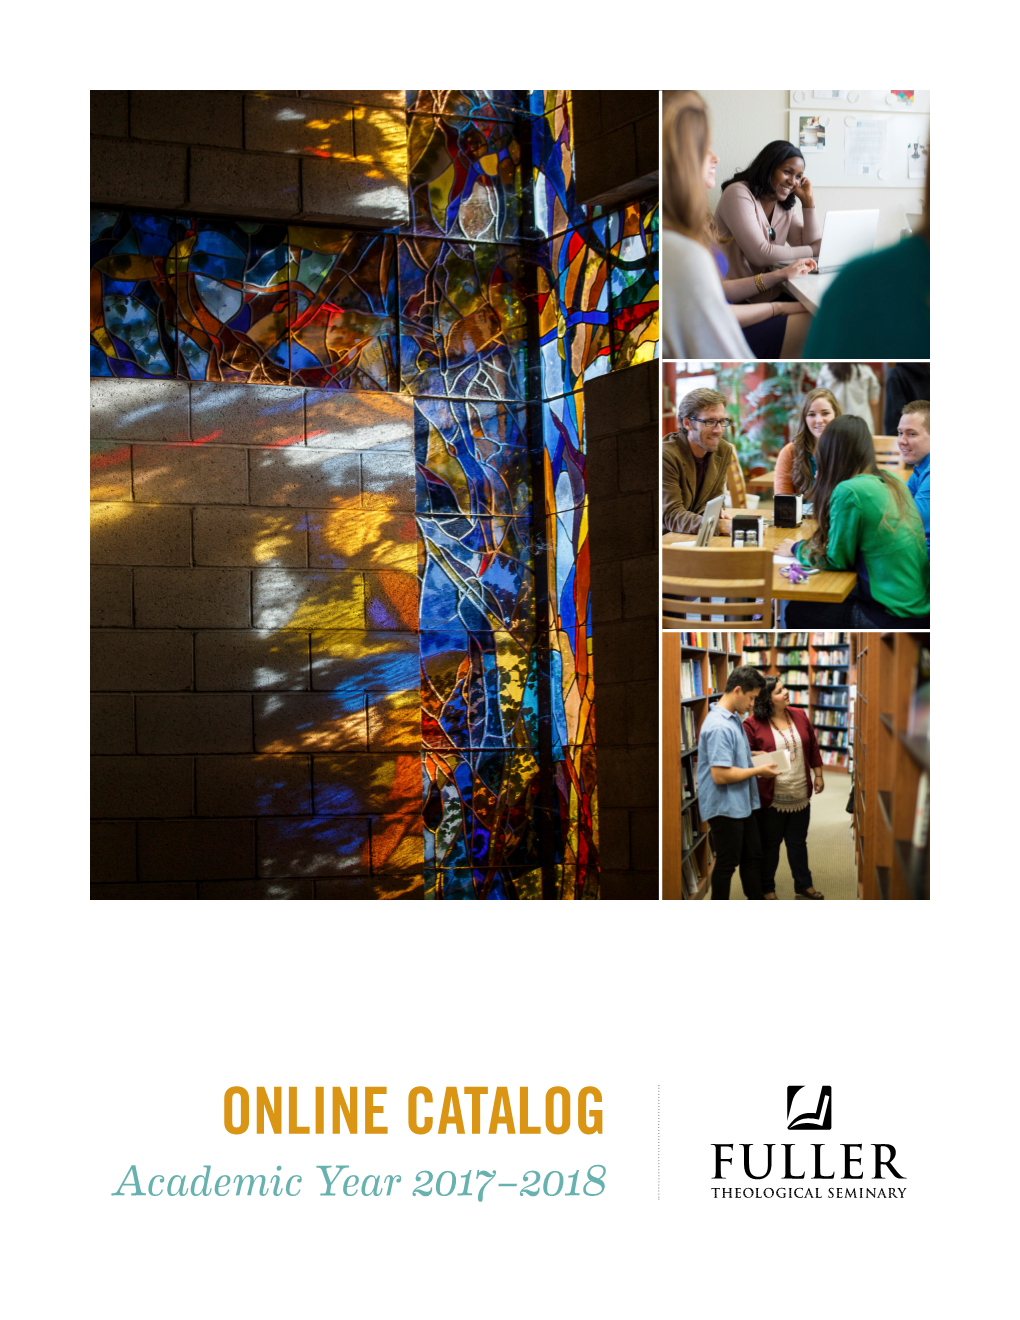 Online Catalog: Academic Year 2017-2018